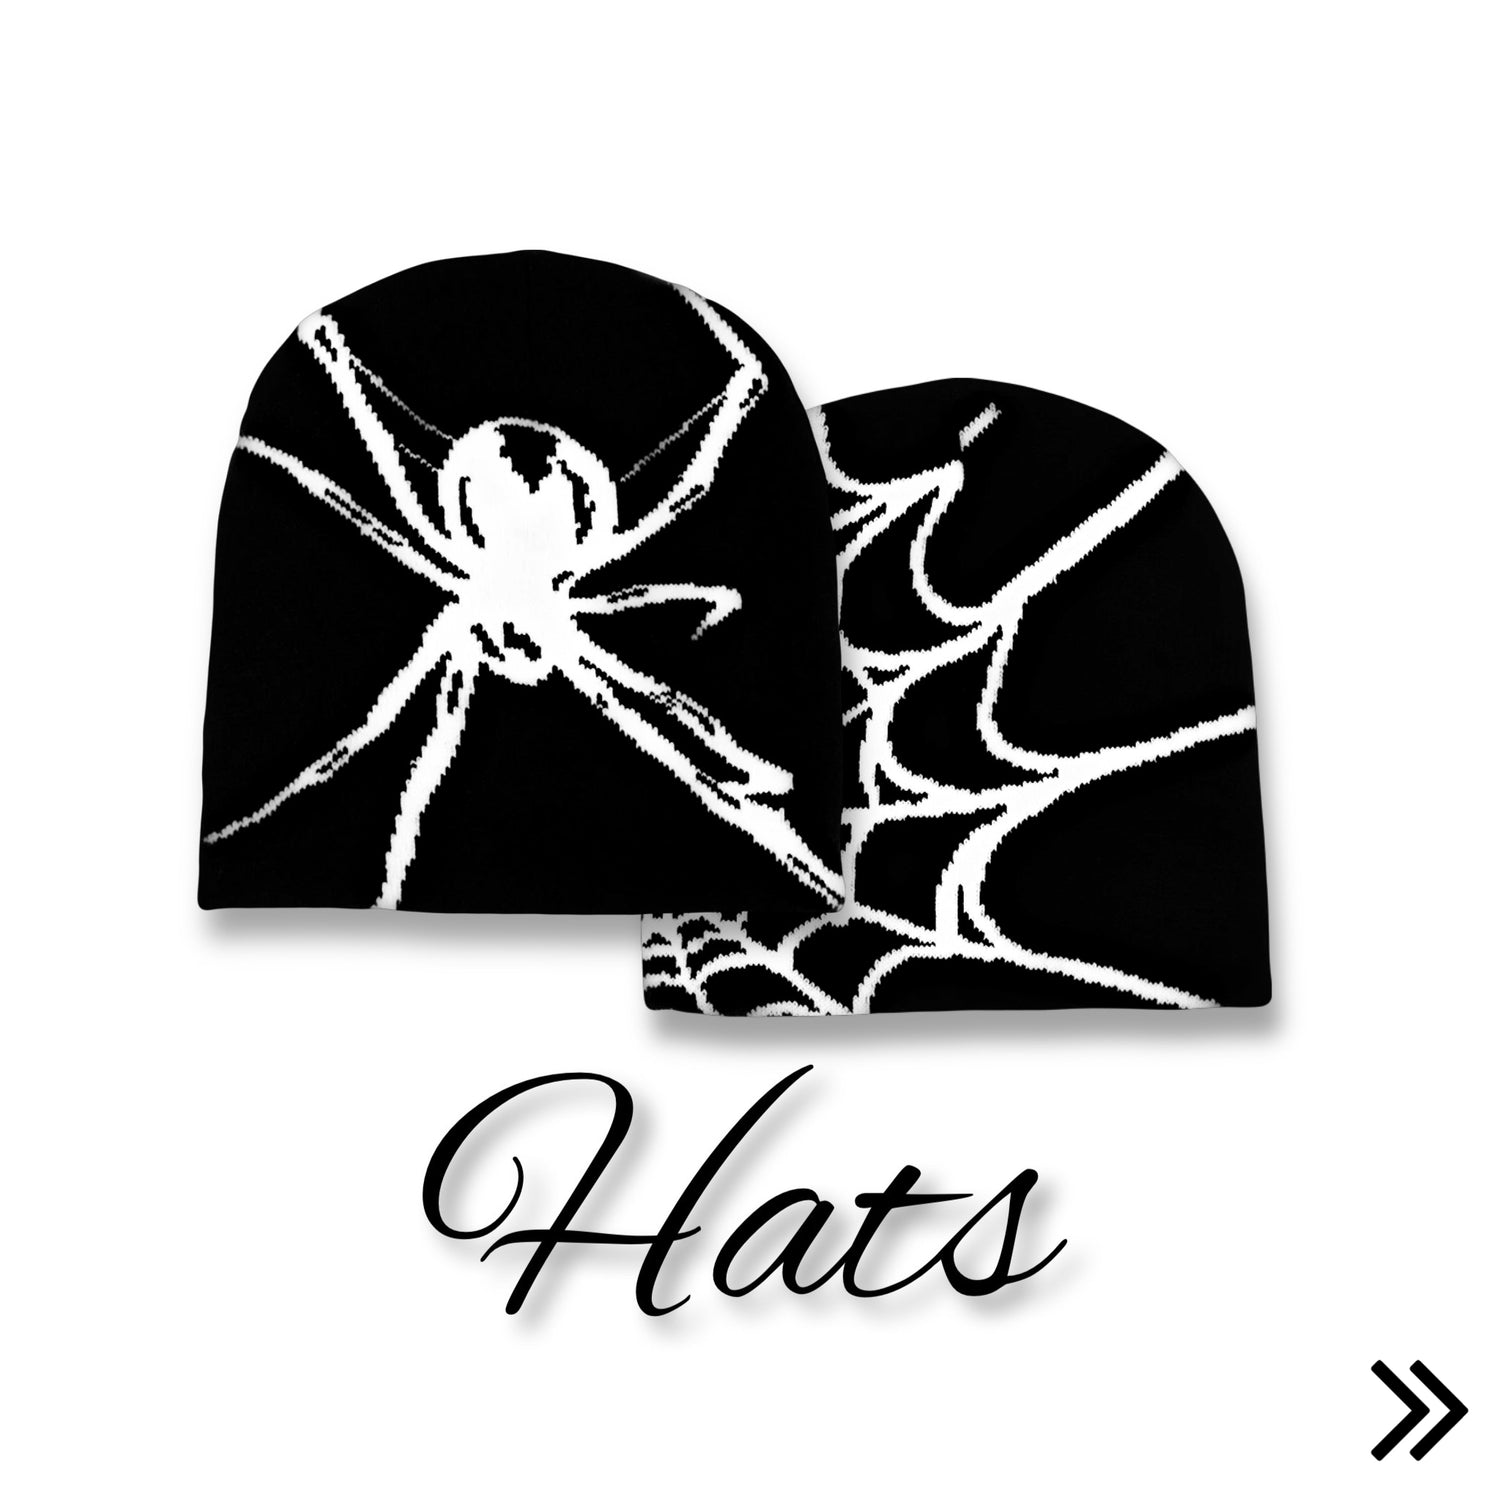 HATS